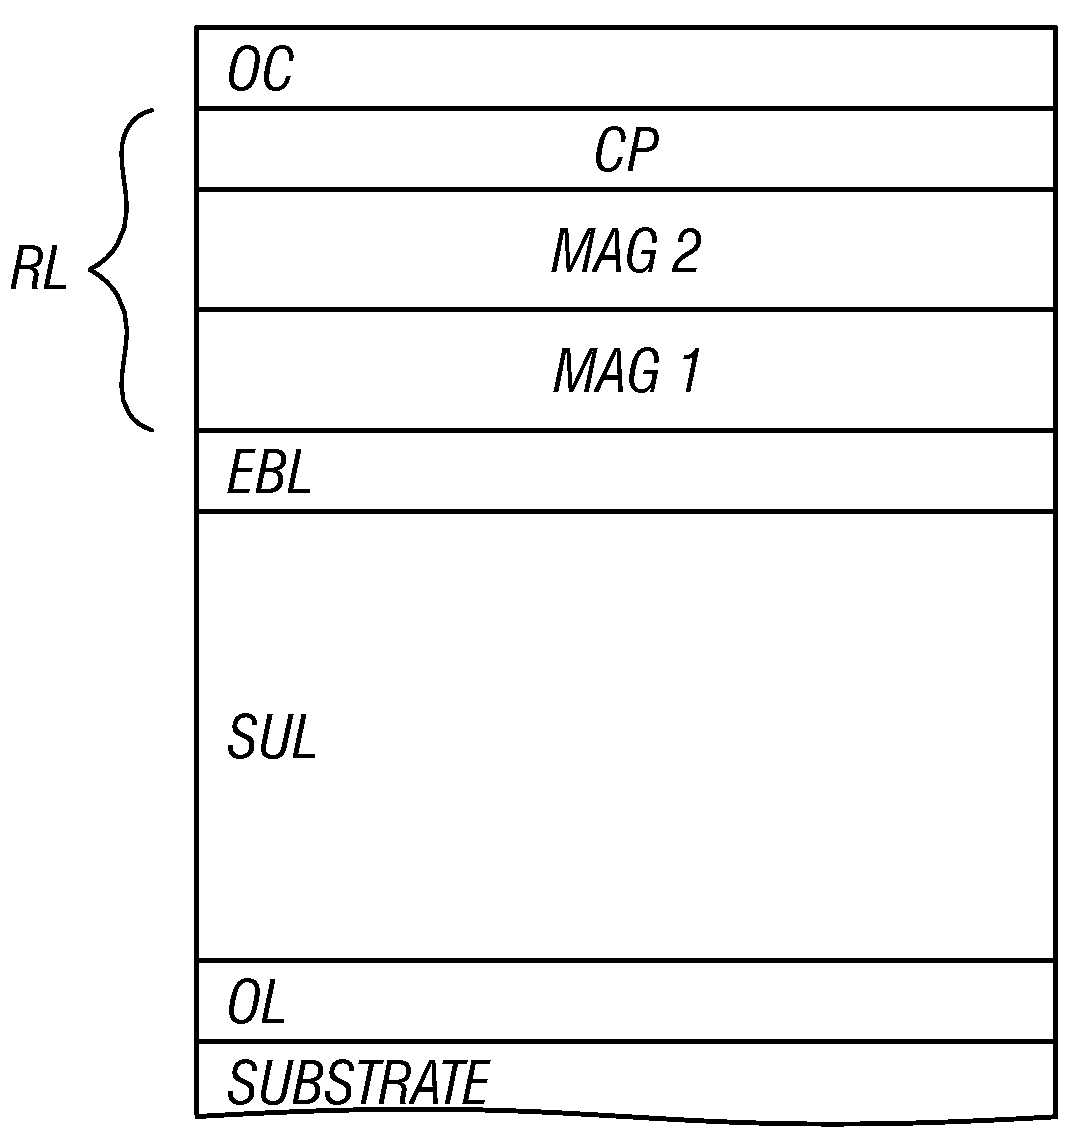 Perpendicular magnetic recording medium with multilayer recording structure including intergranular exchange enhancement layer